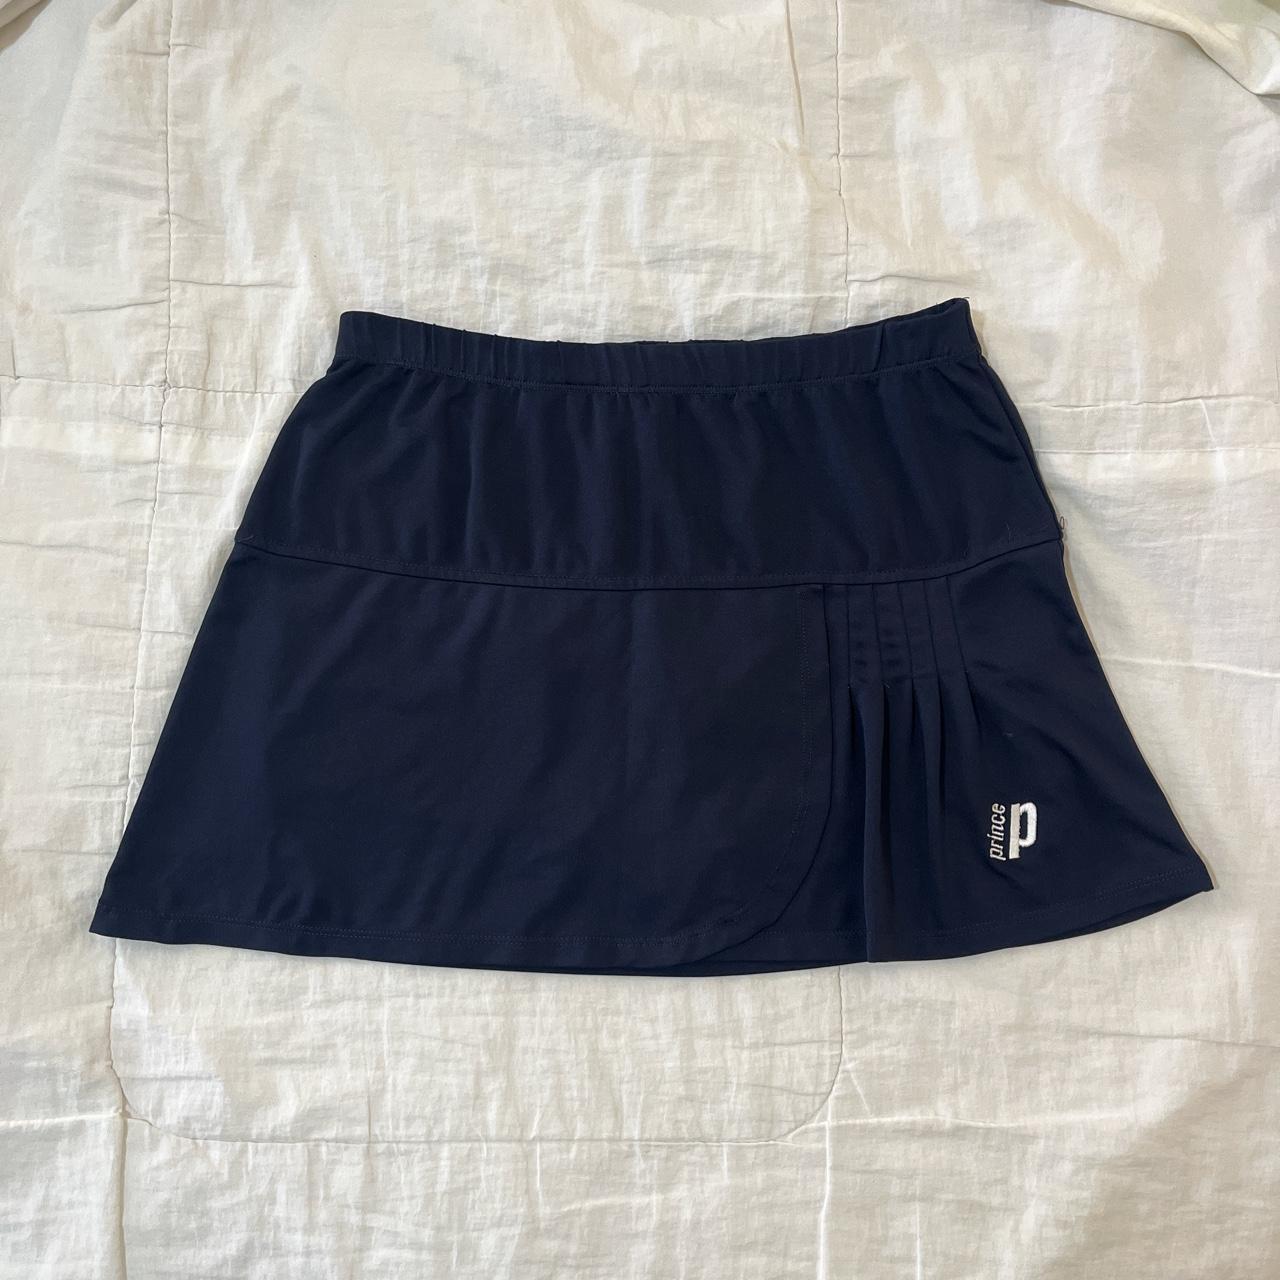 navy blue tennis skirt with integrated shorts best... - Depop